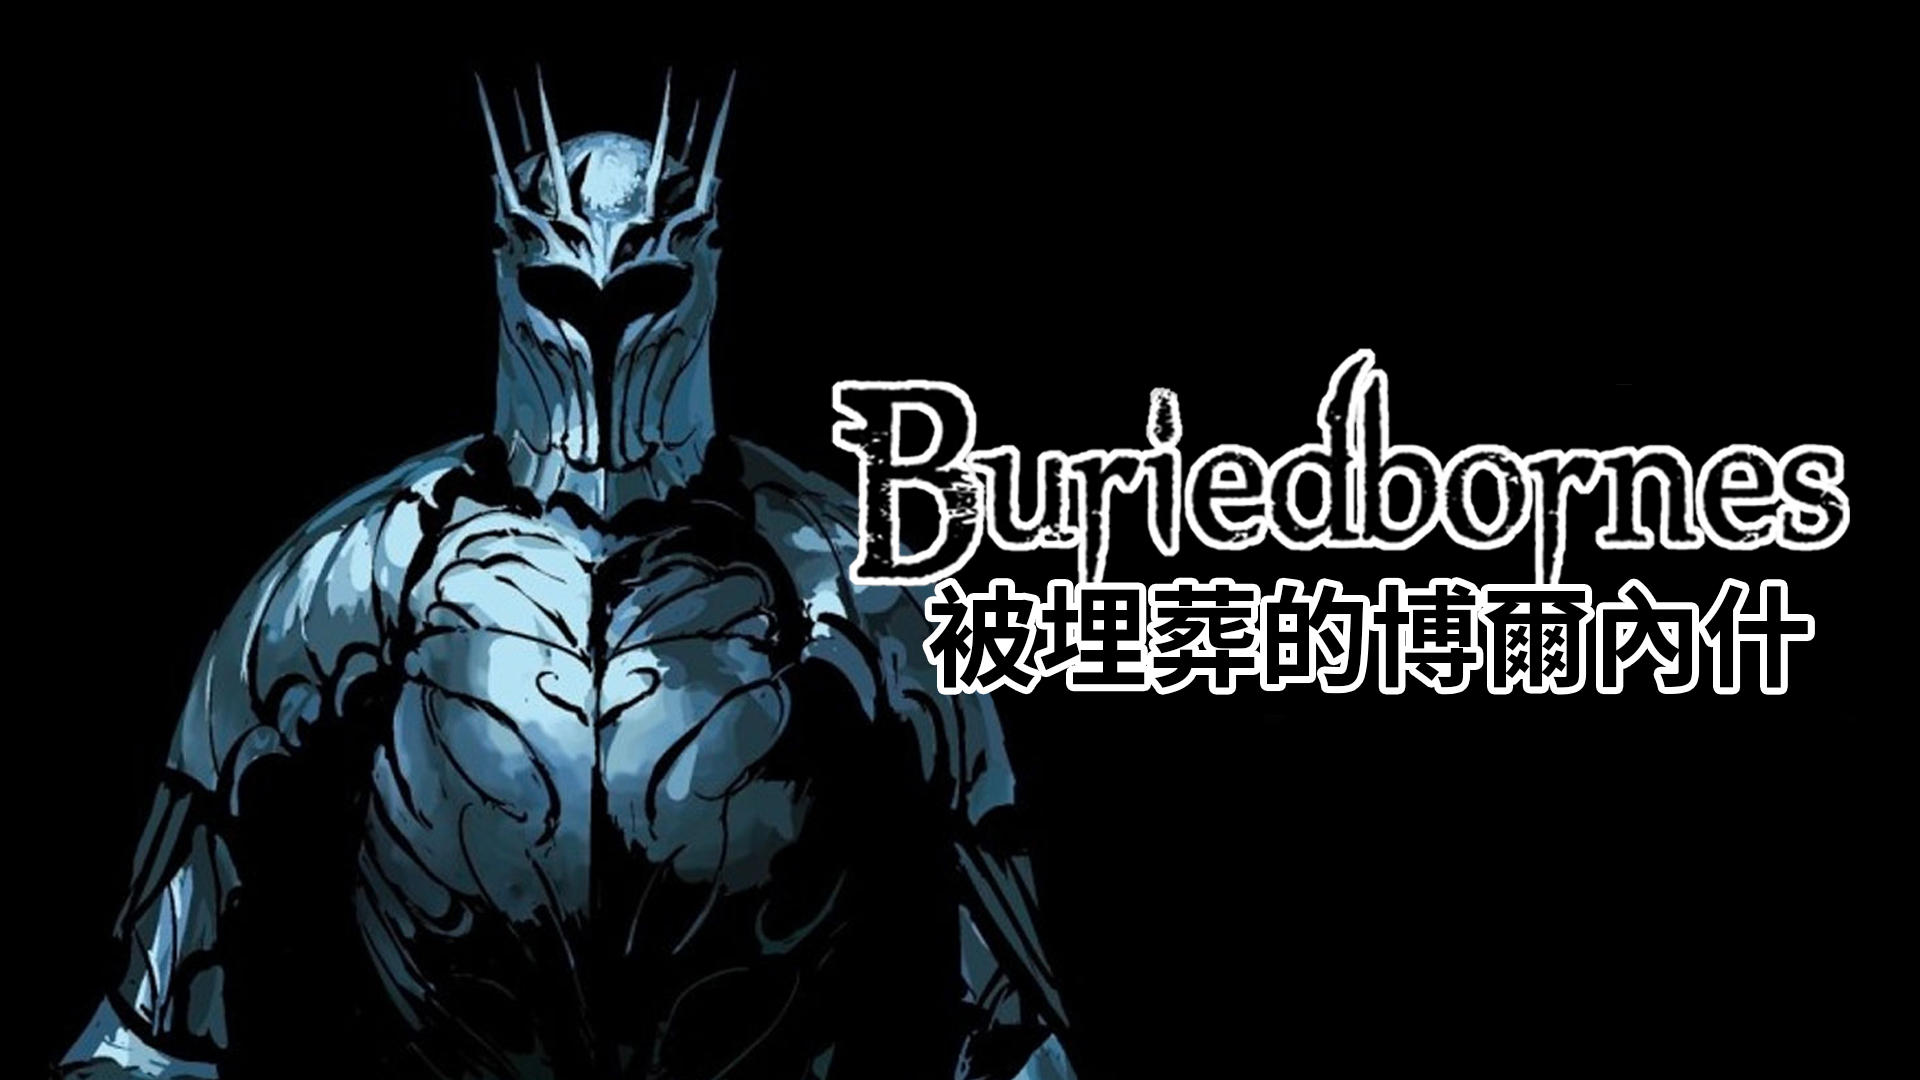 Banner of Buriedbornes -Hardcore RPG- 3.9.18